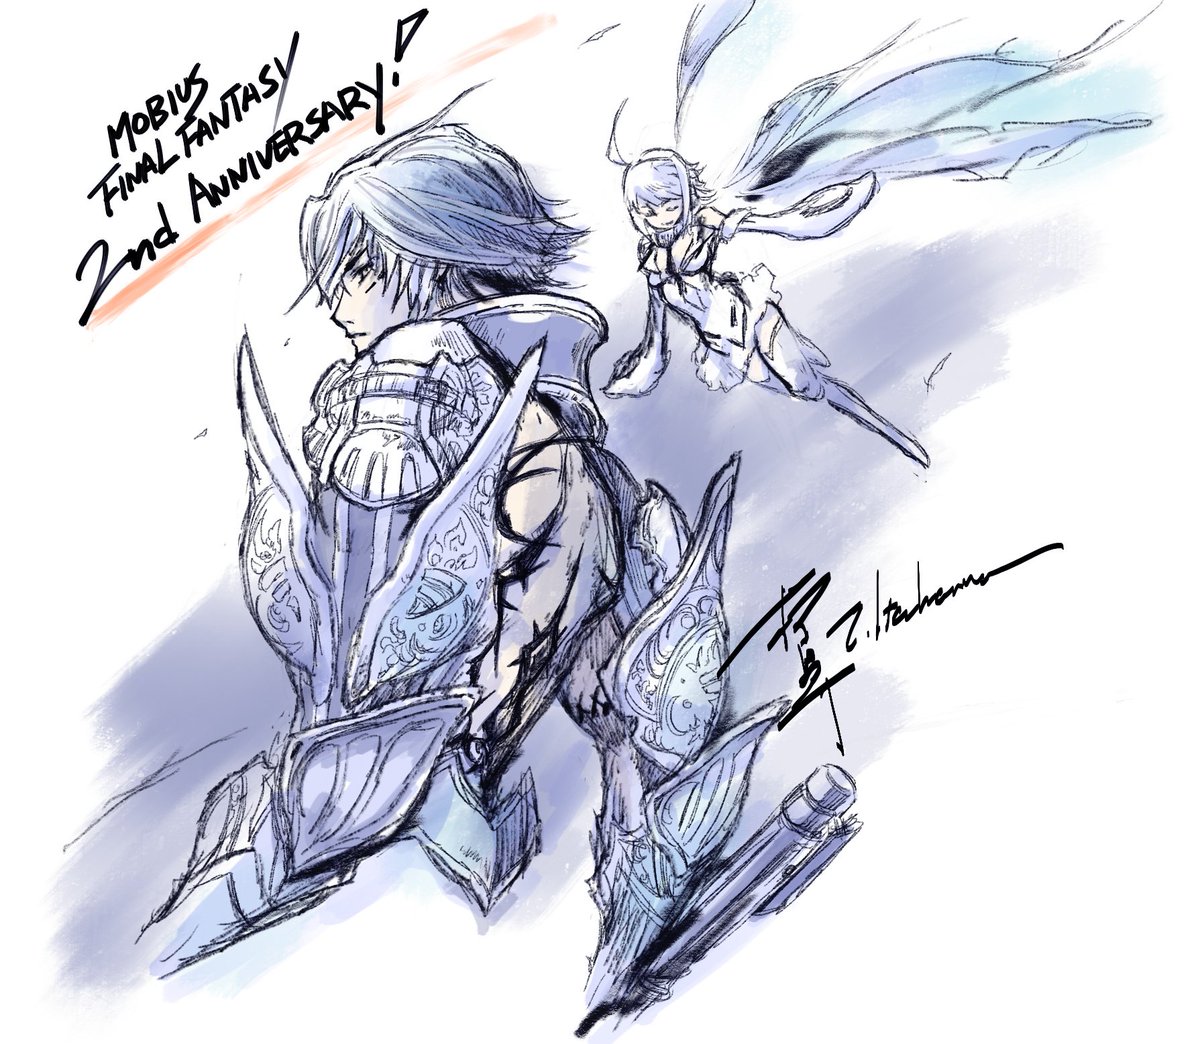 Nova Crystallis Wol And Echo Drawn By Itahanat For Mobius Final Fantasy S 2nd Anniversary